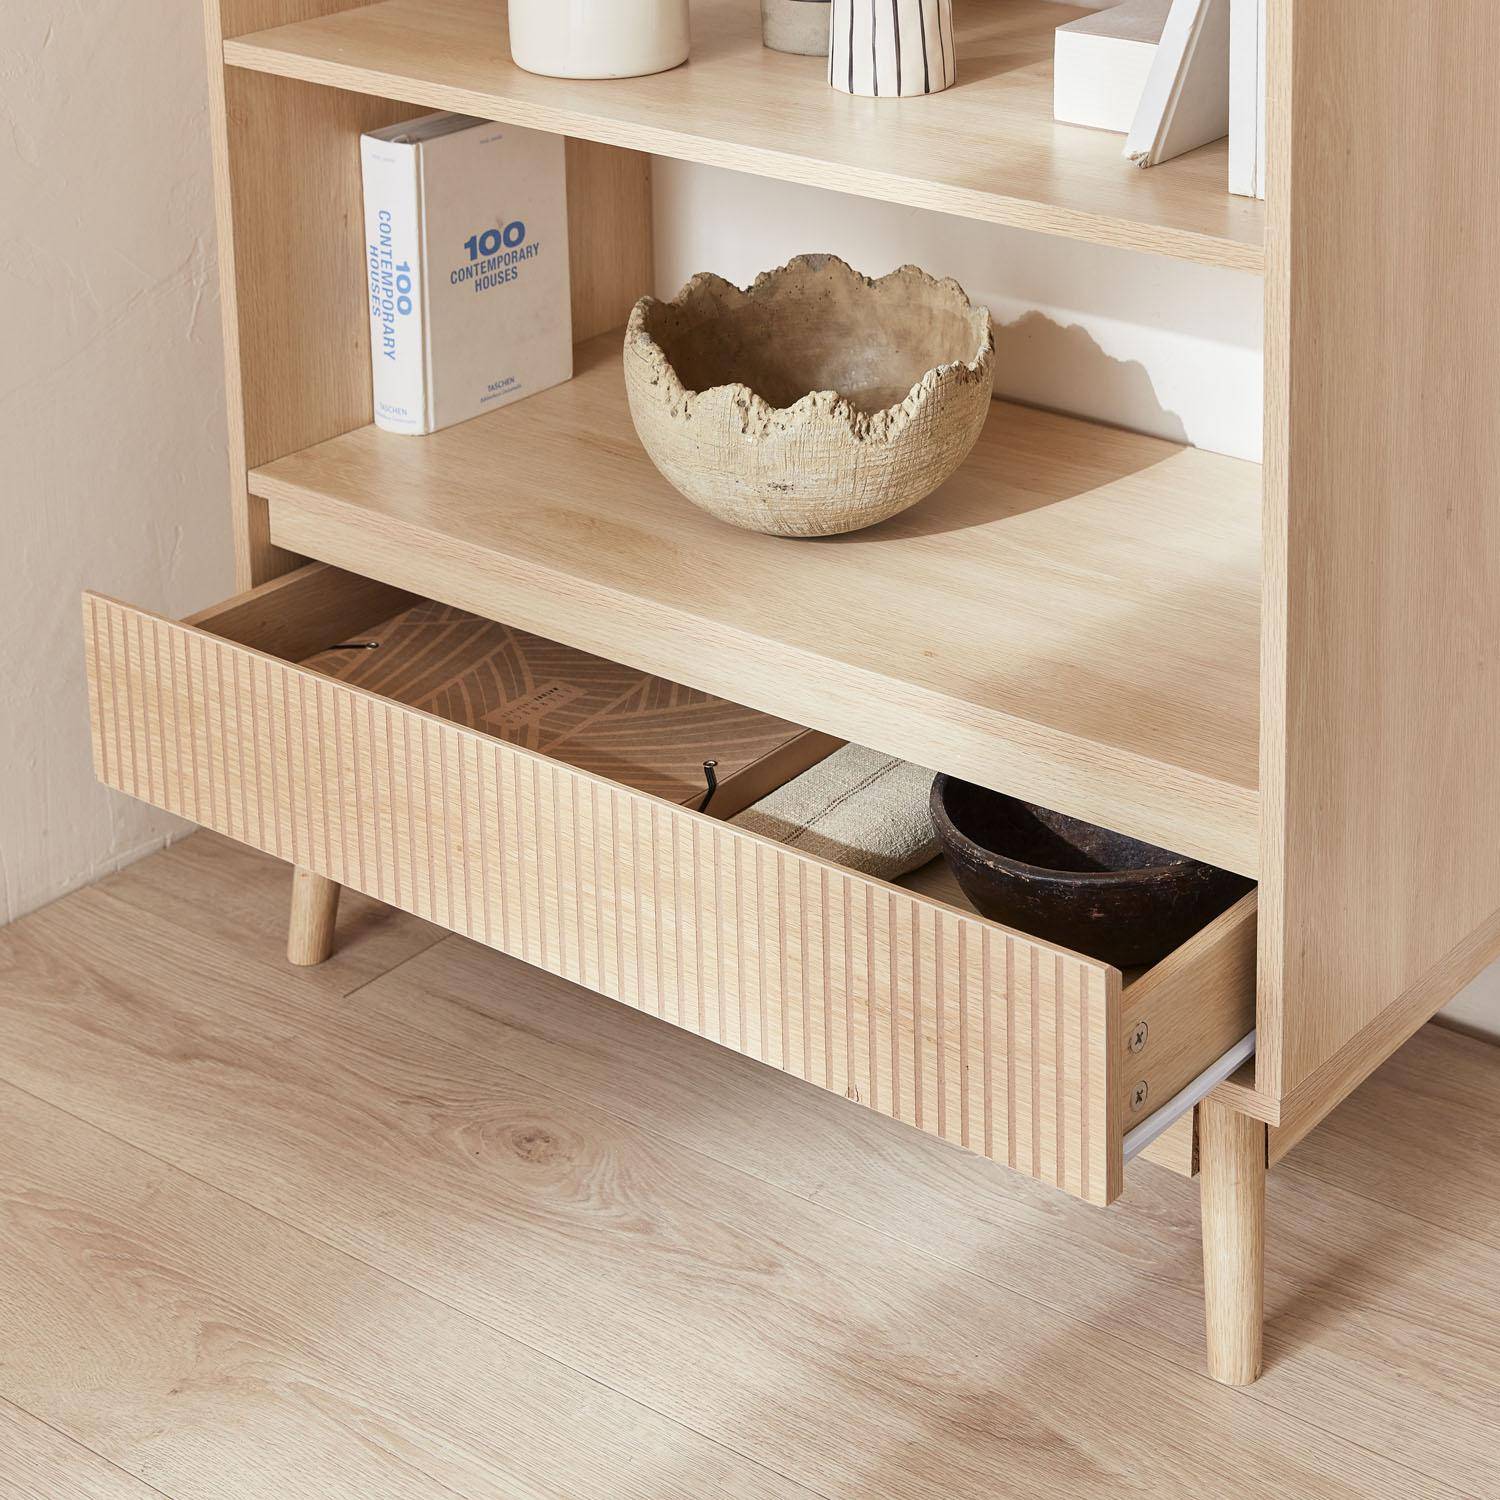 3-level bookshelf with drawer, wood decor, L80xW39.5xH120cm Photo2